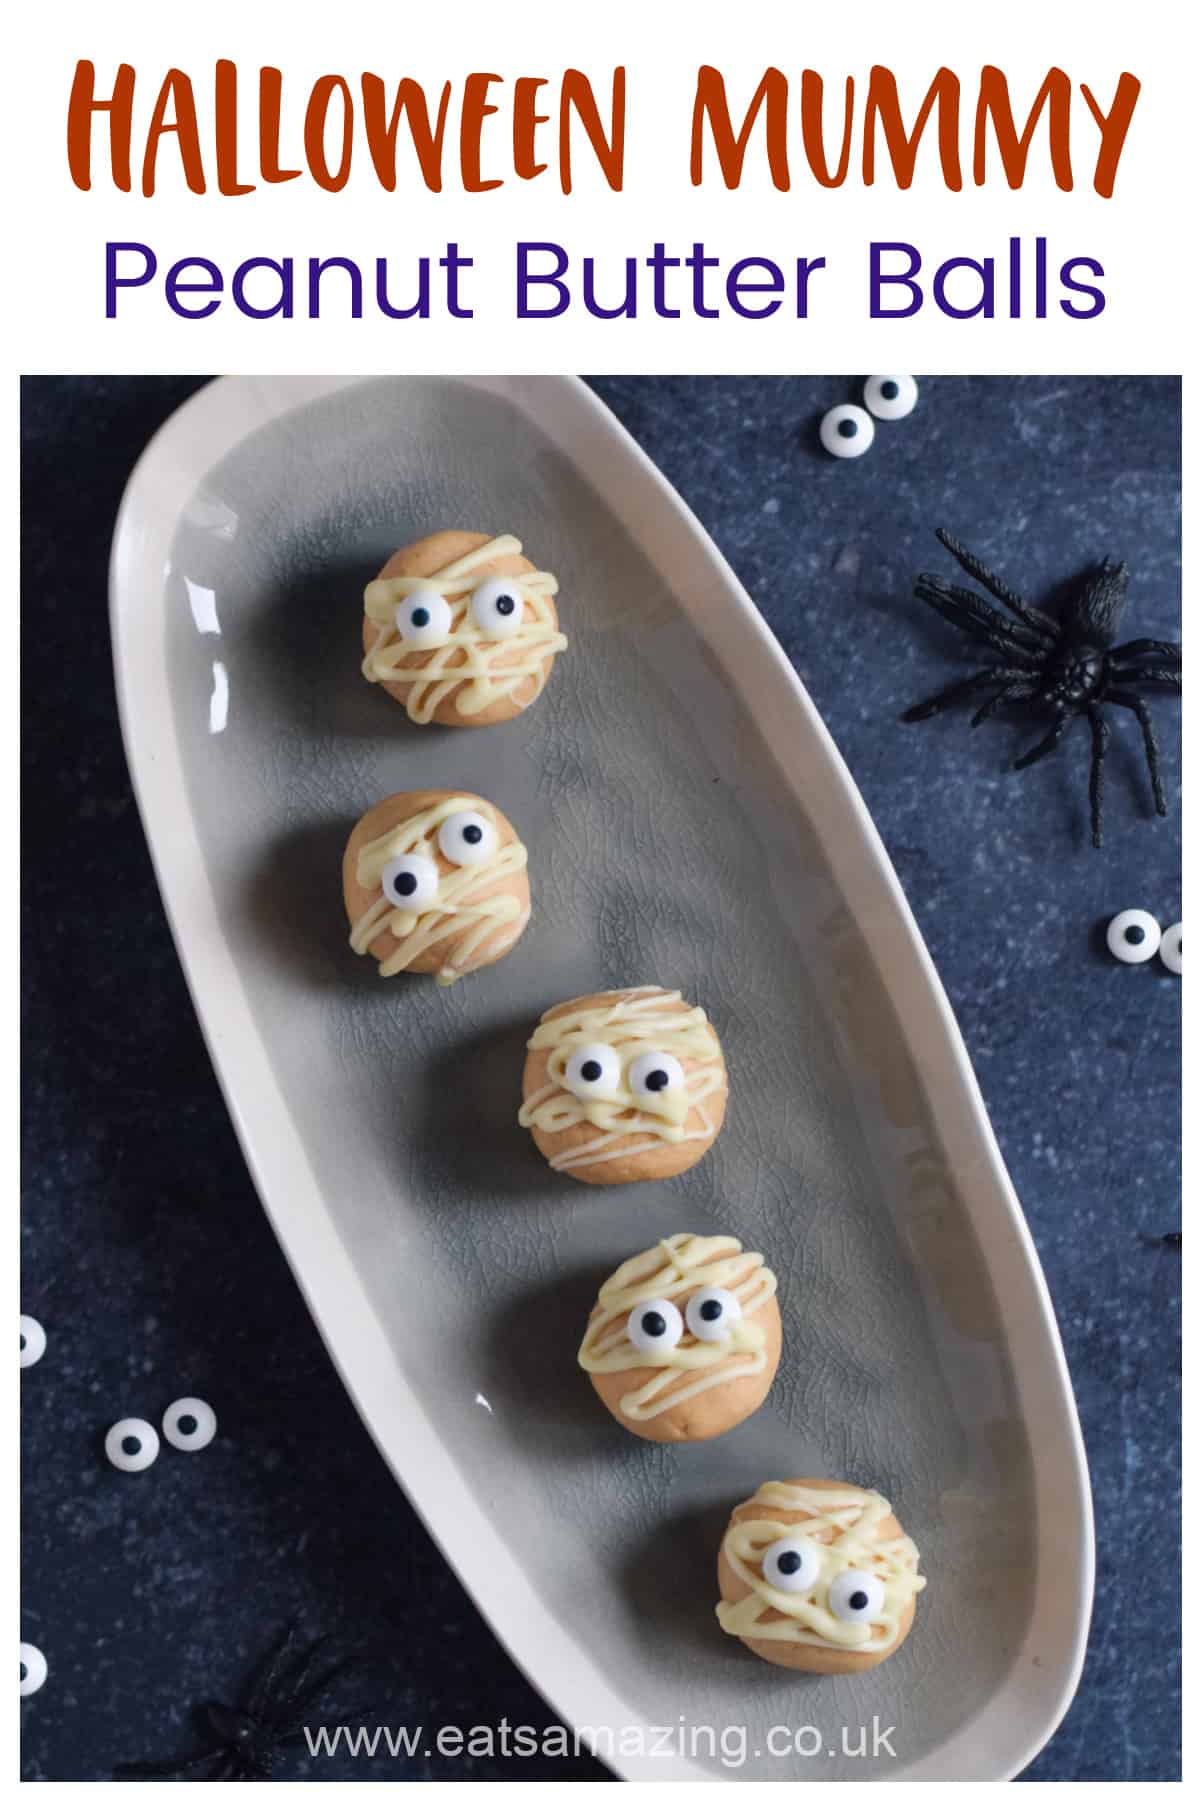 Mummy Halloween Peanut Butter Balls Recipe - Easy Fun Halloween Food for Kids